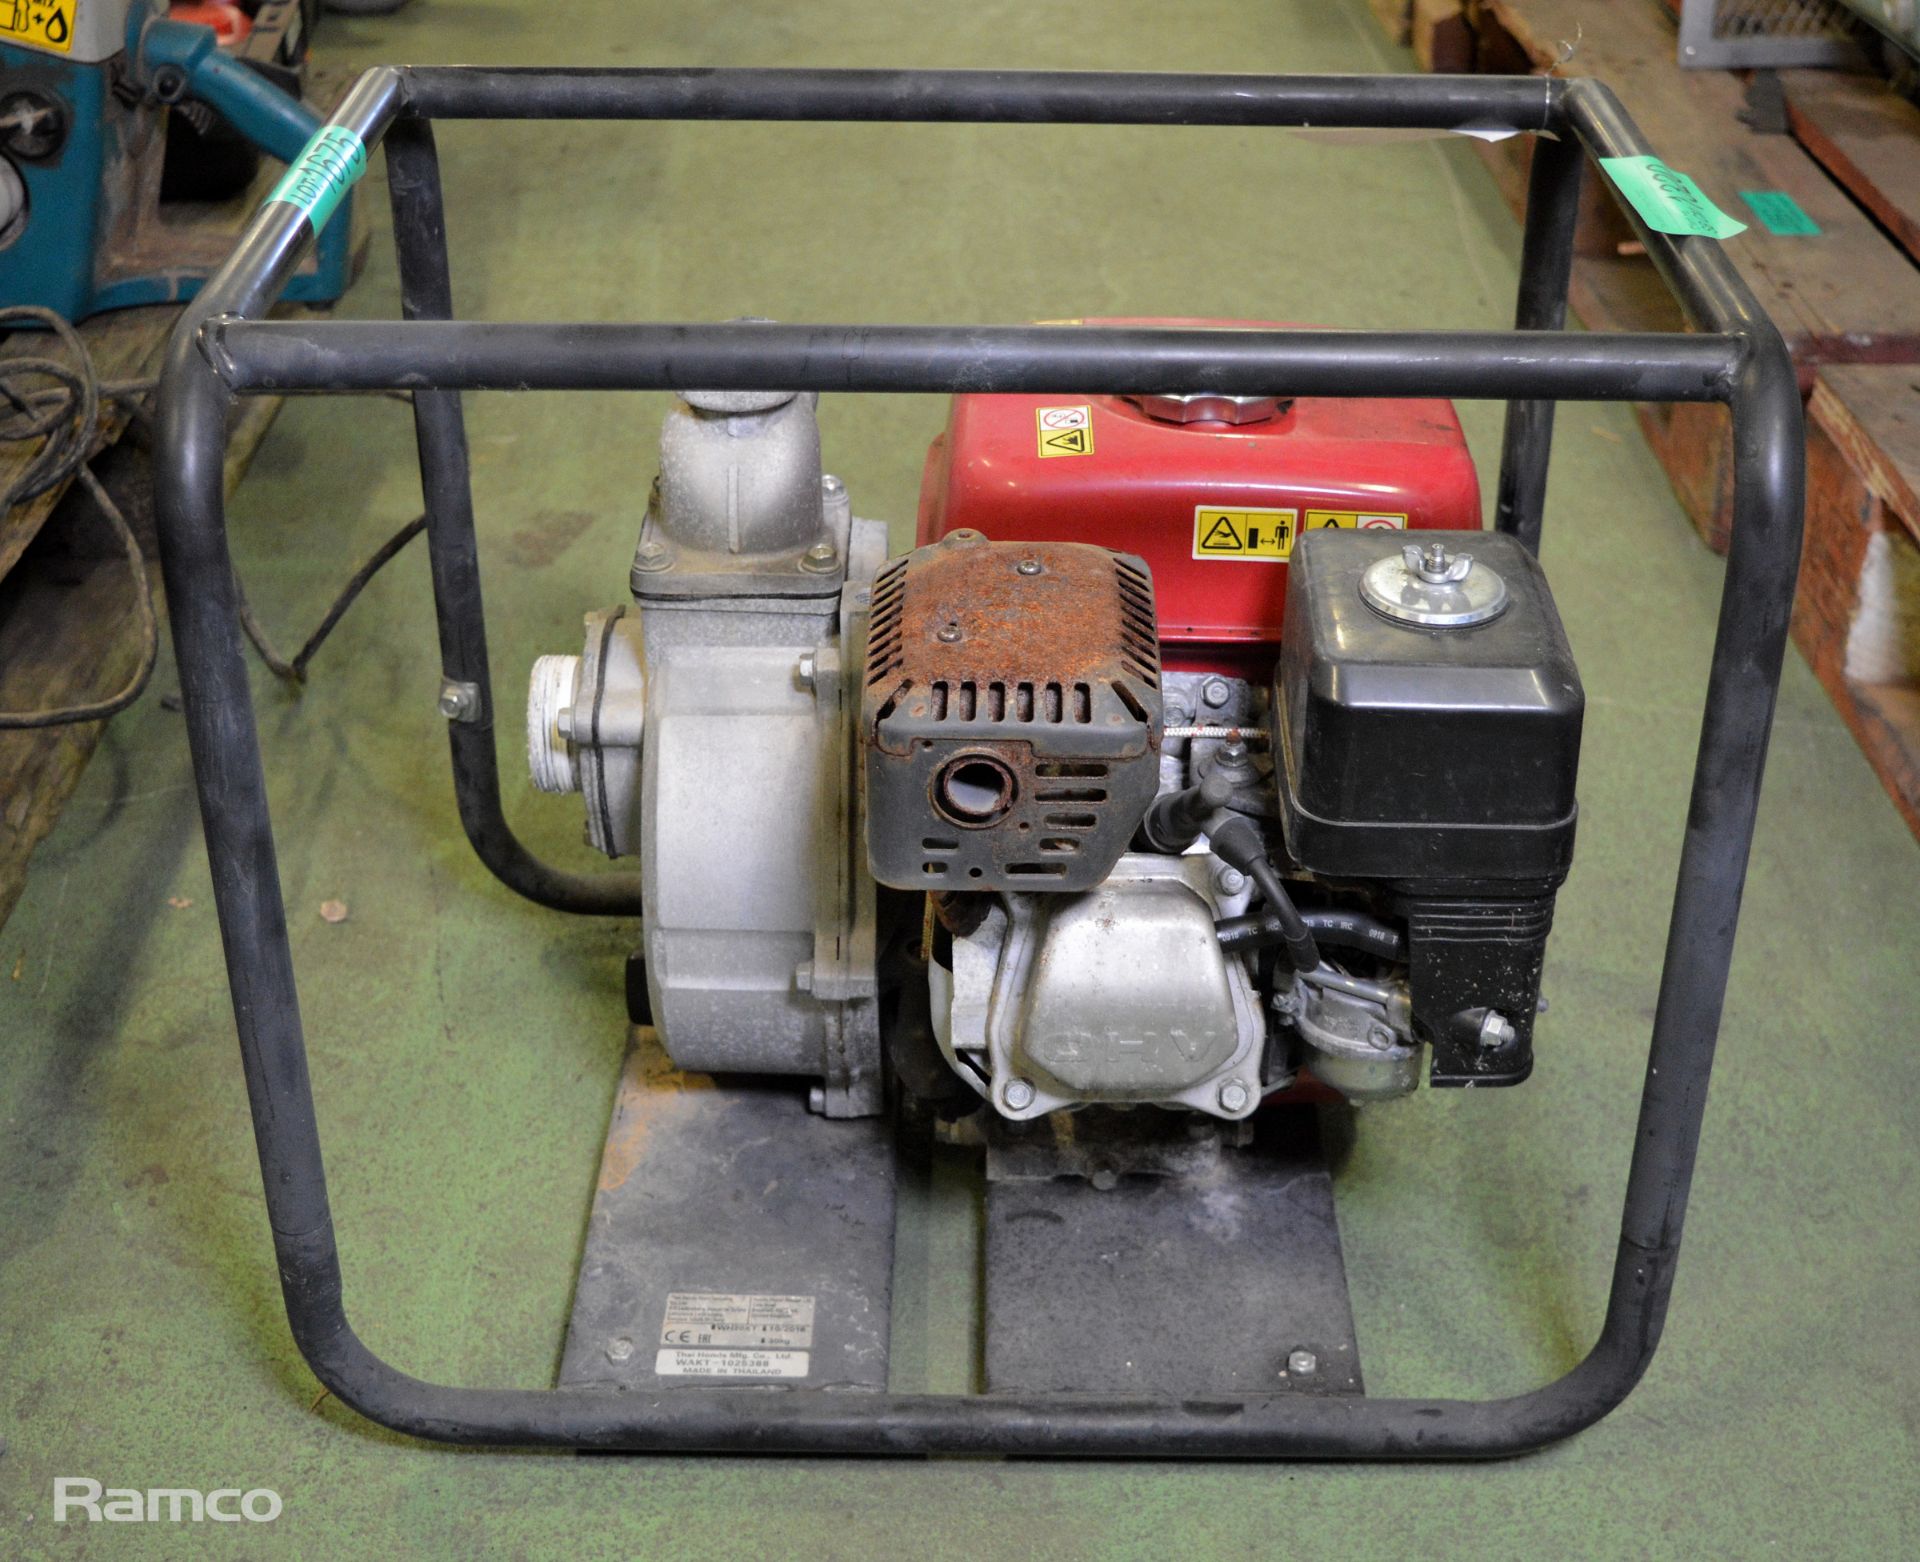 Pump unit in frame - Honda GX engine - lost compression